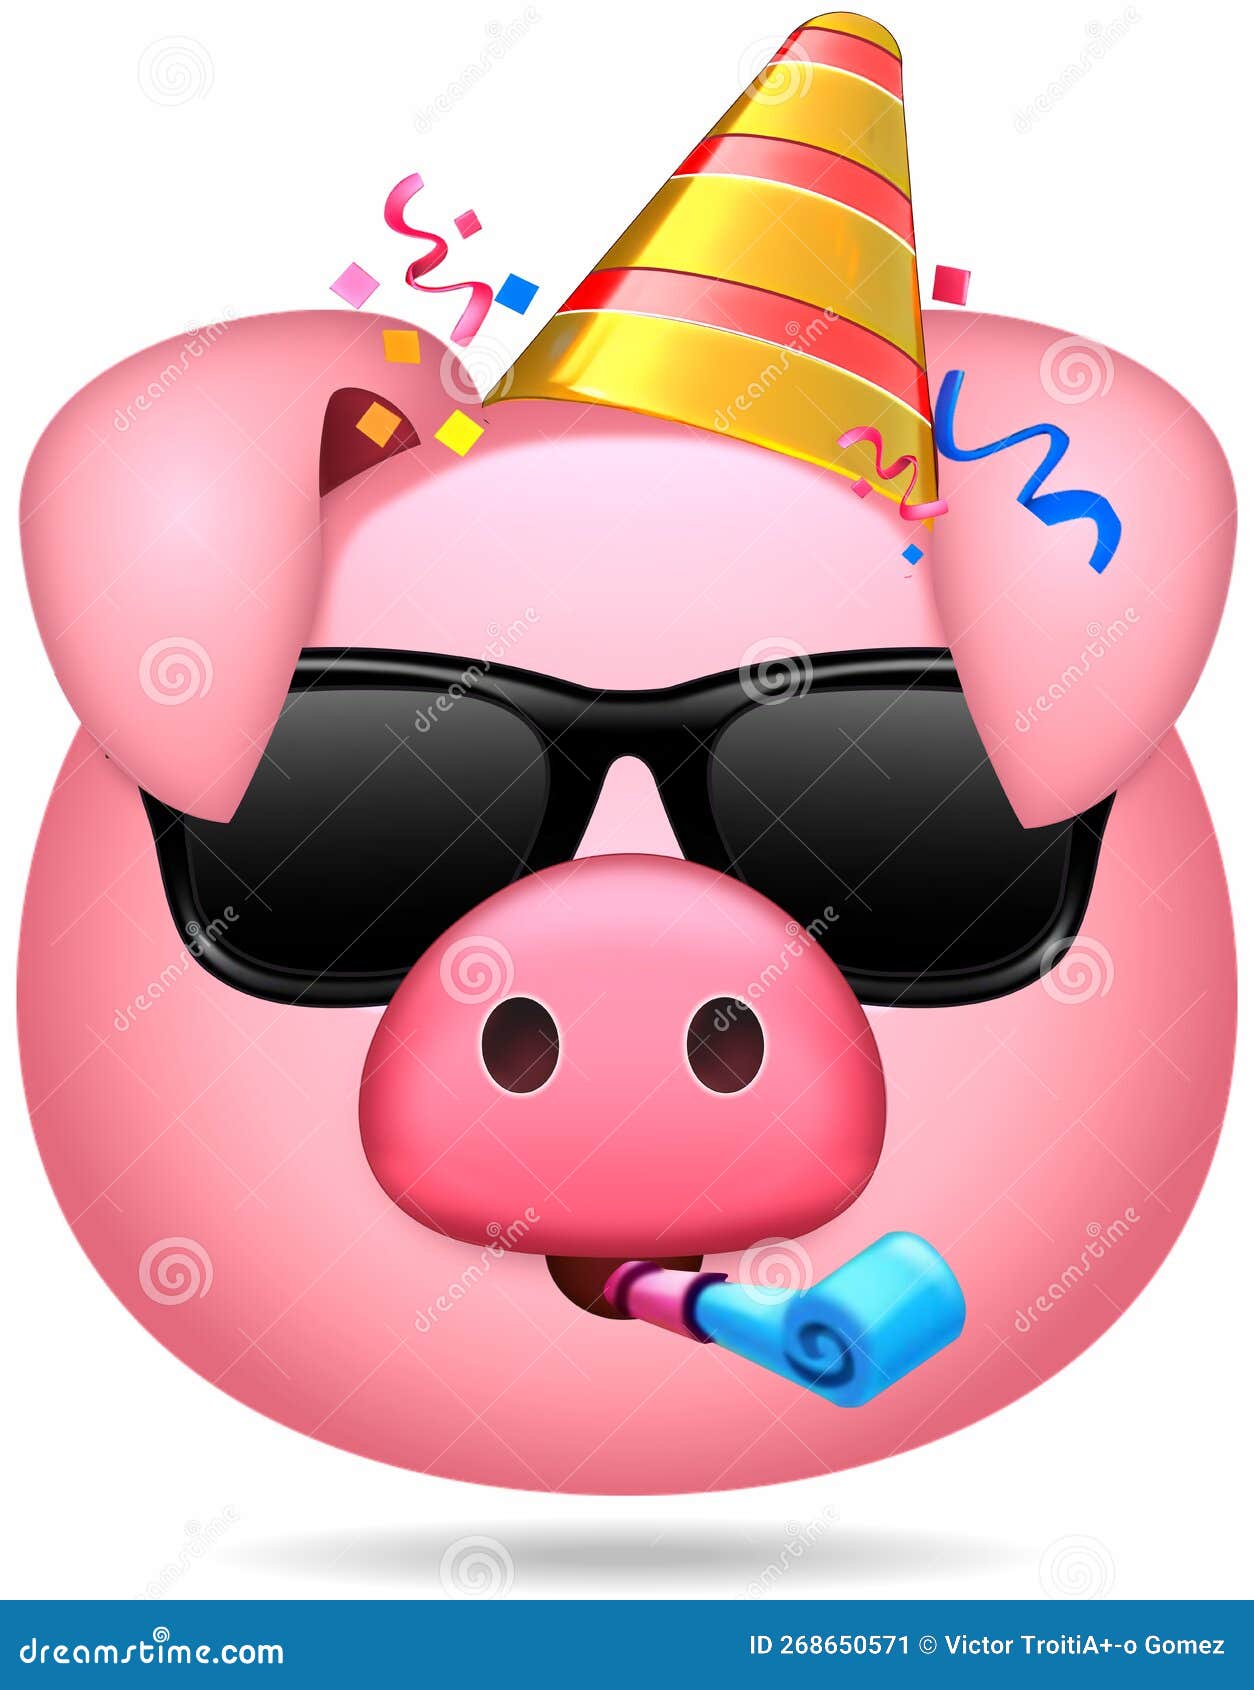 divertido emoticono de cerdo rosa